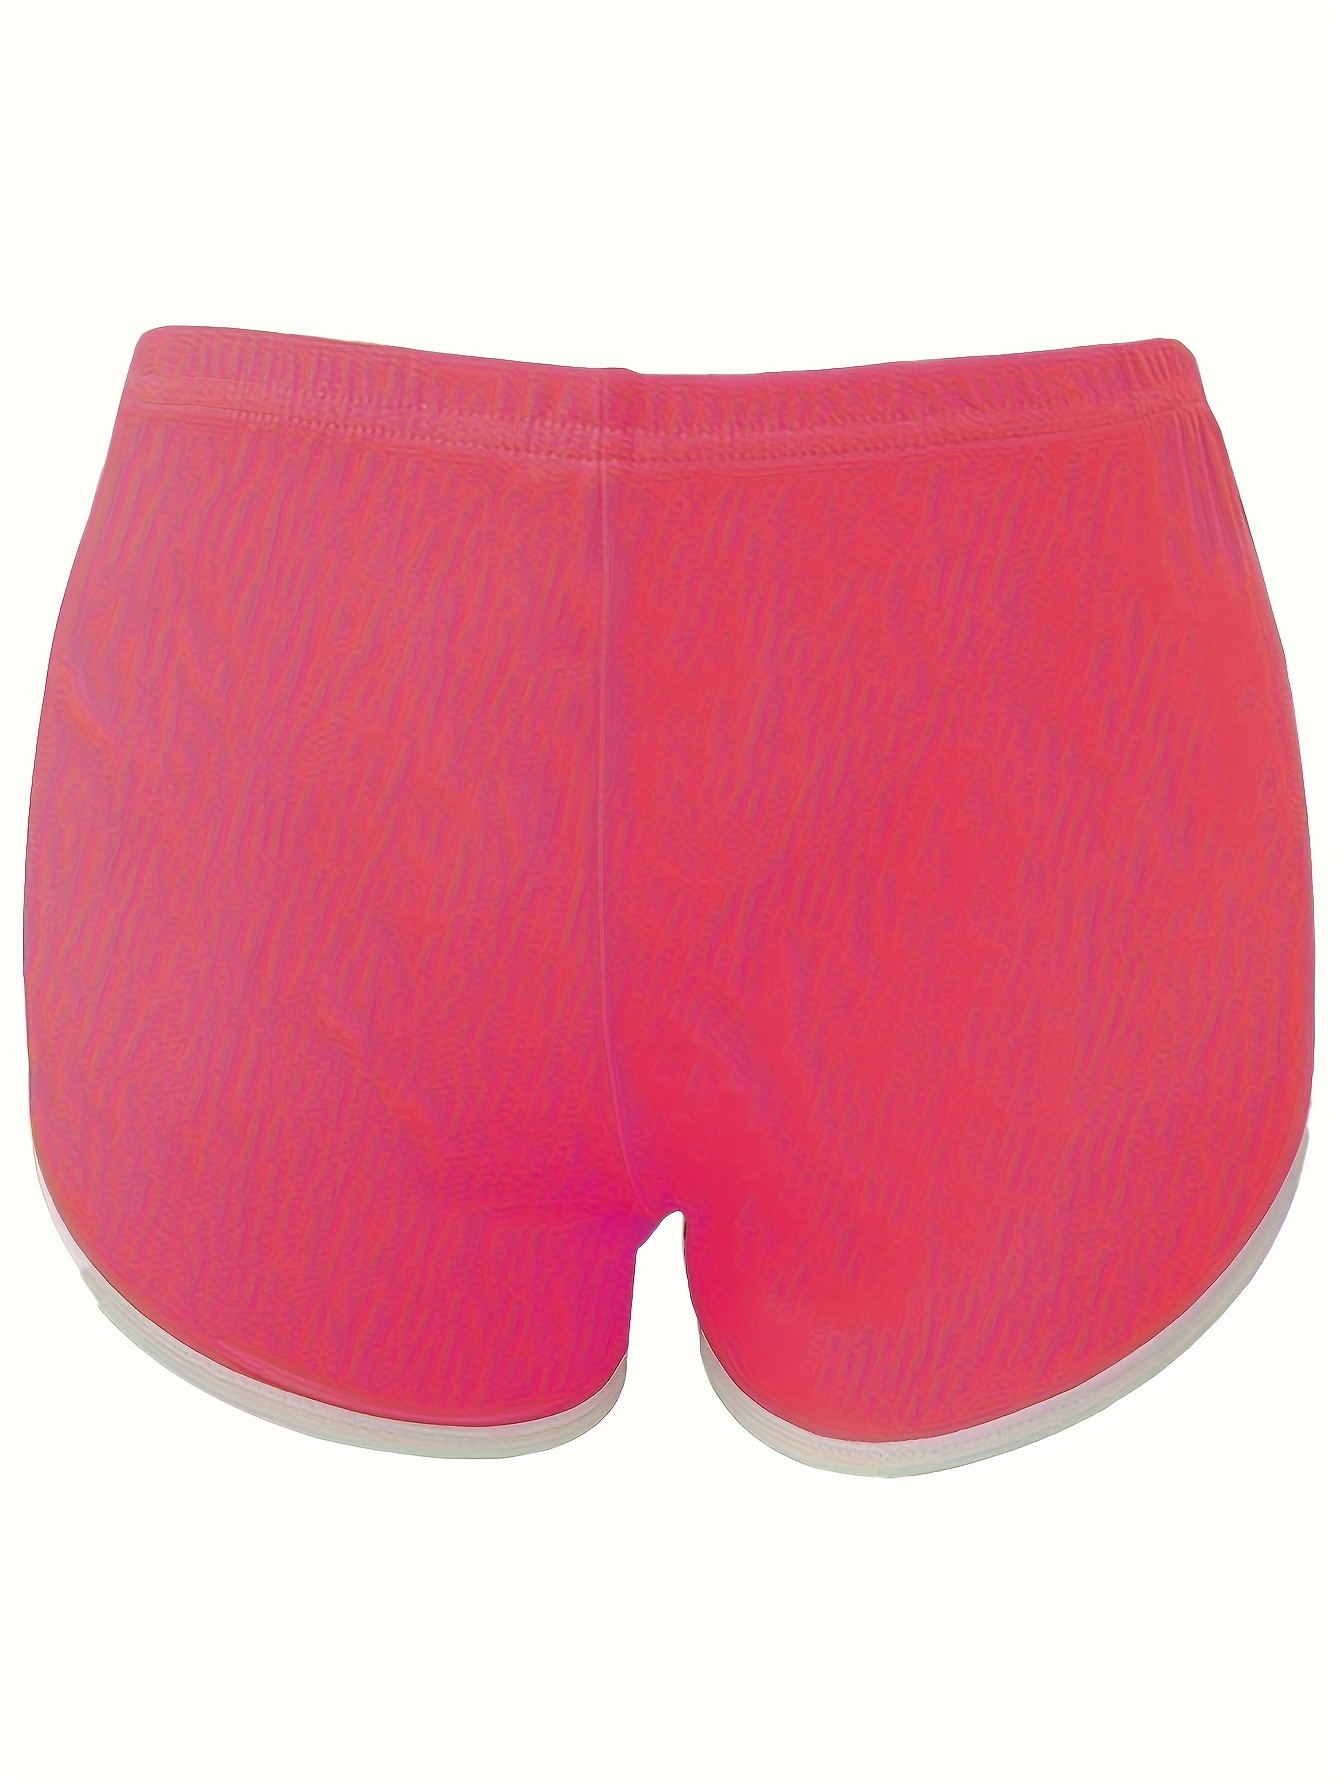 LYCRA HOTPANTS Yoga Hotpants Sport Shorts Gym Wear Beach Shorts